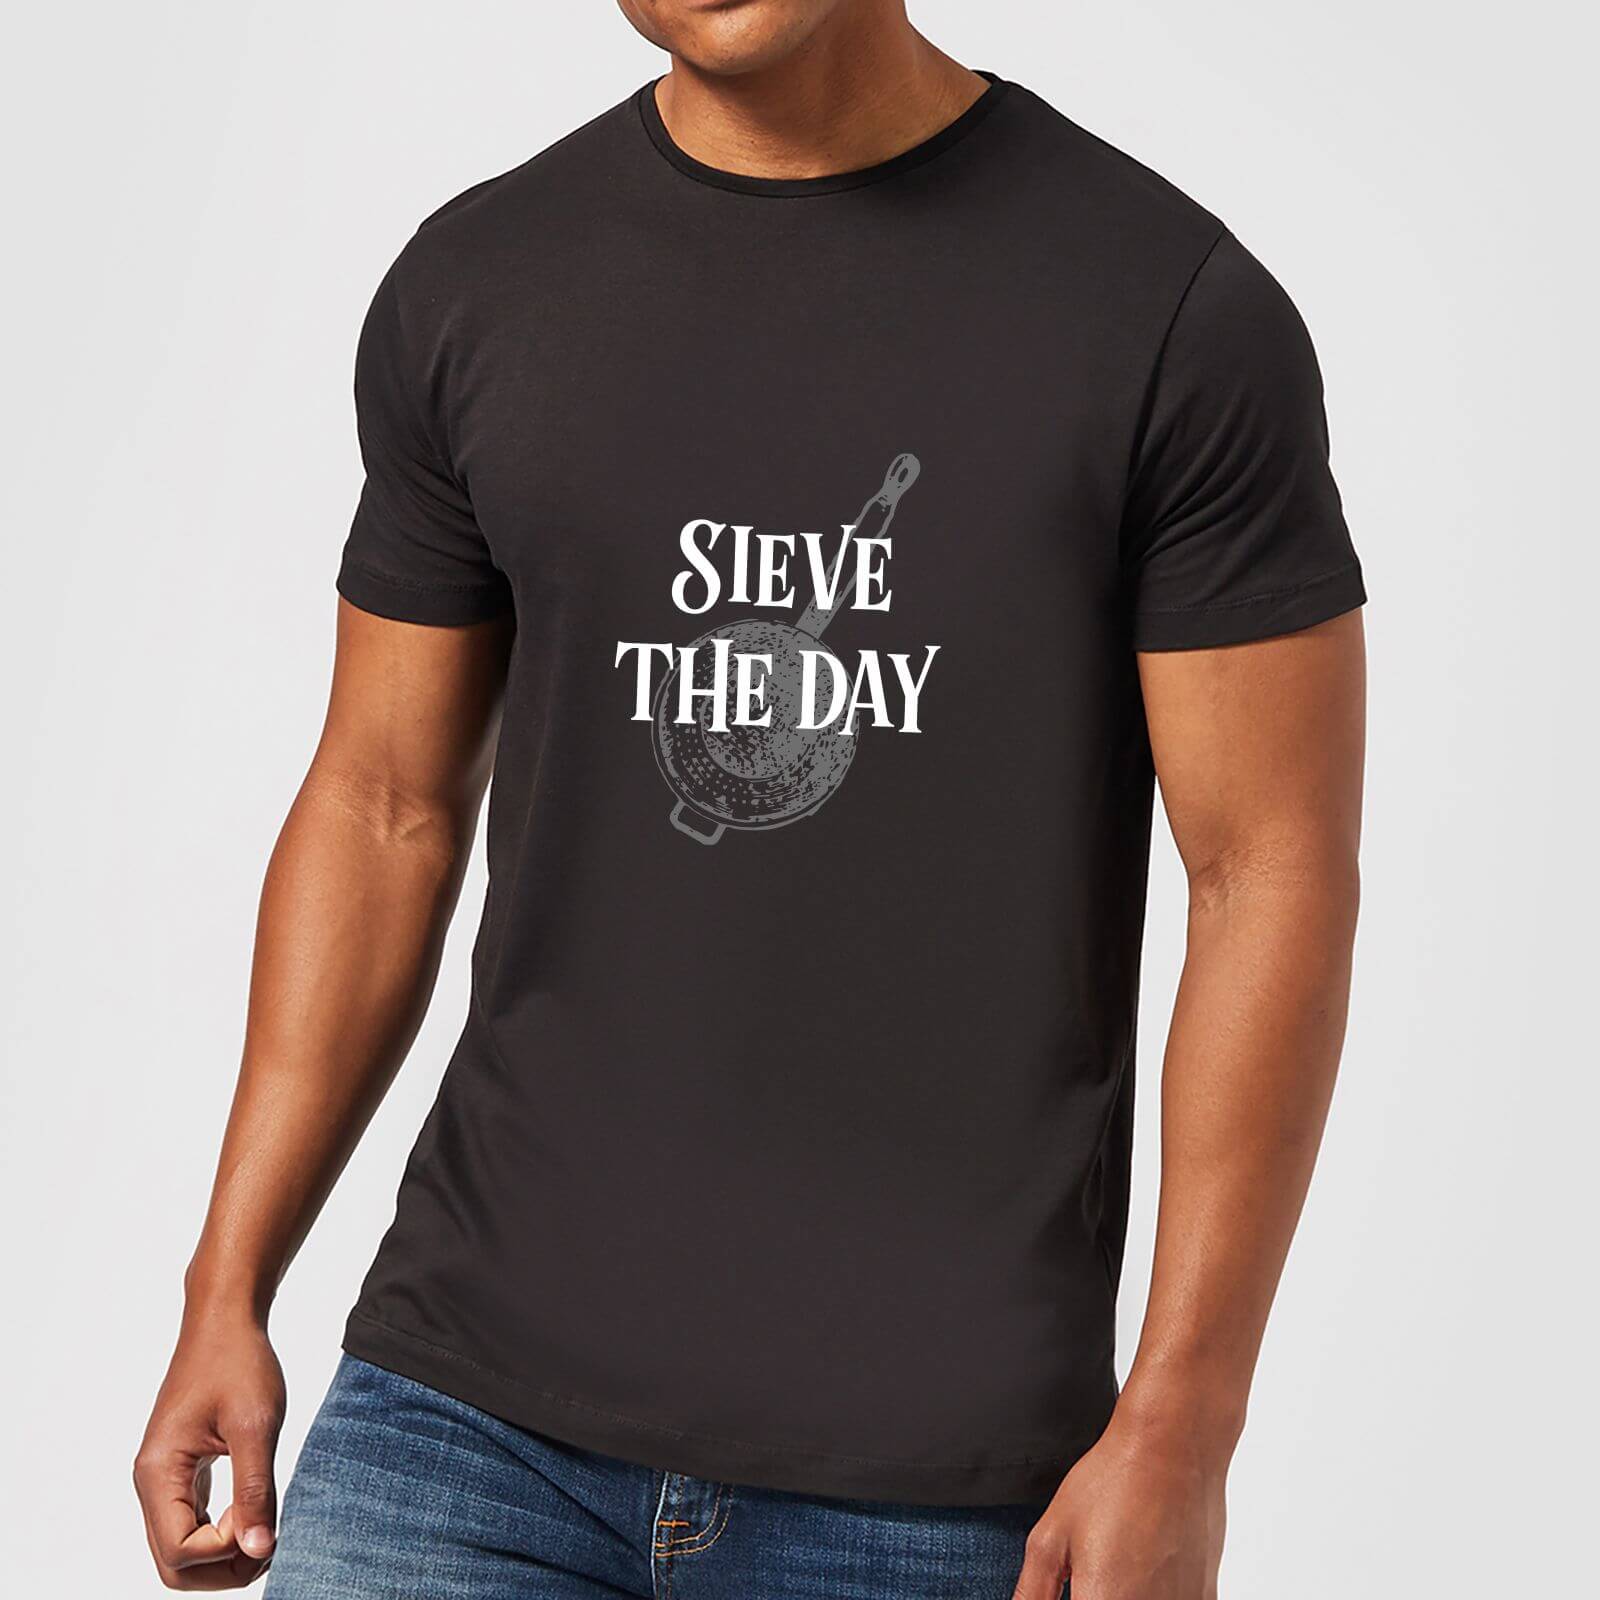 Sieve The Day T-Shirt - Black - XXL - Black